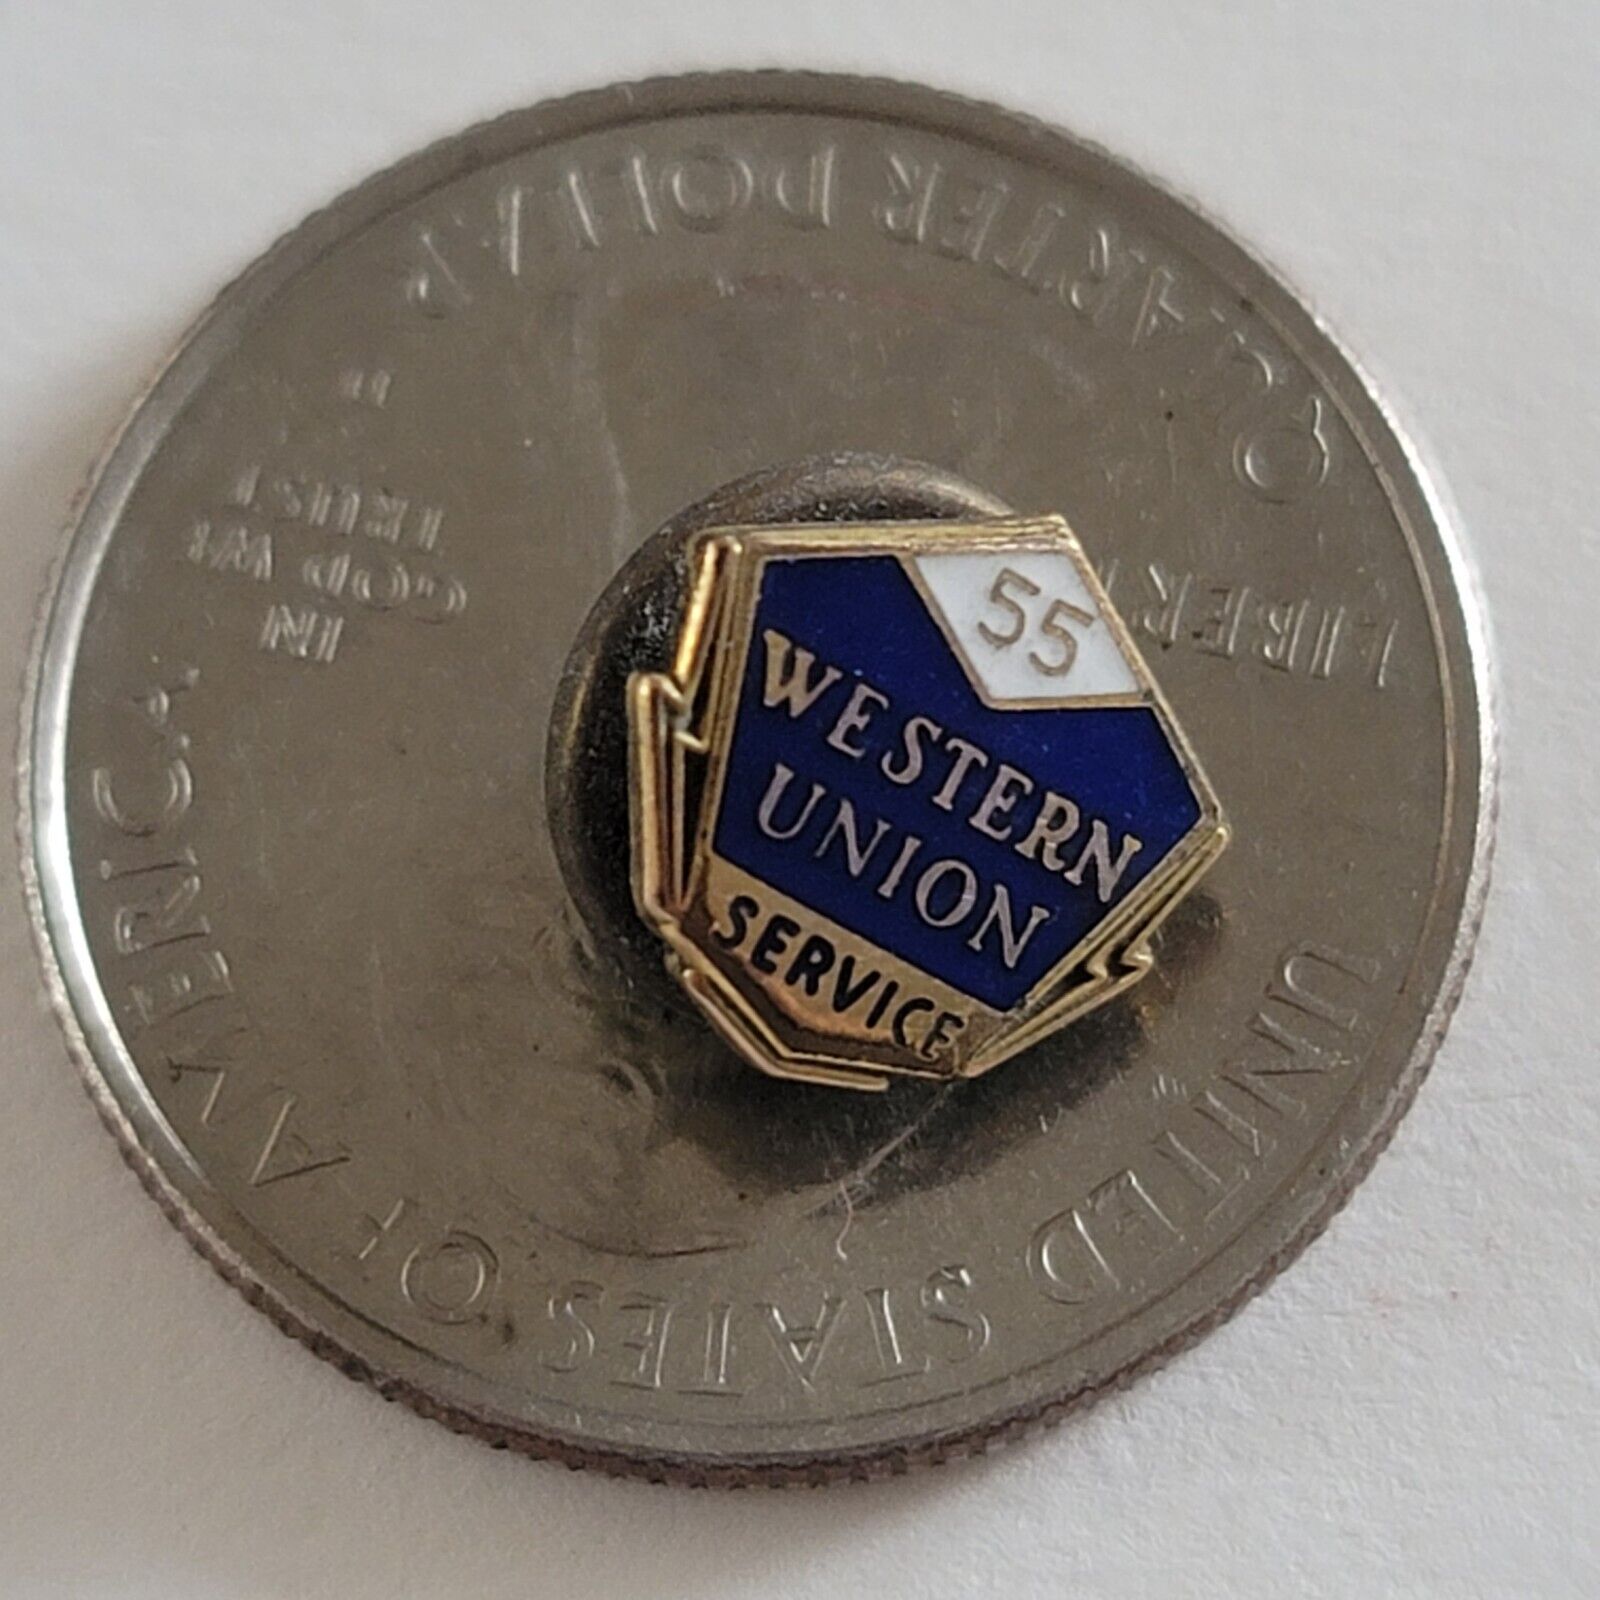 Western Union 55 Year Employee Service Pin Vintage